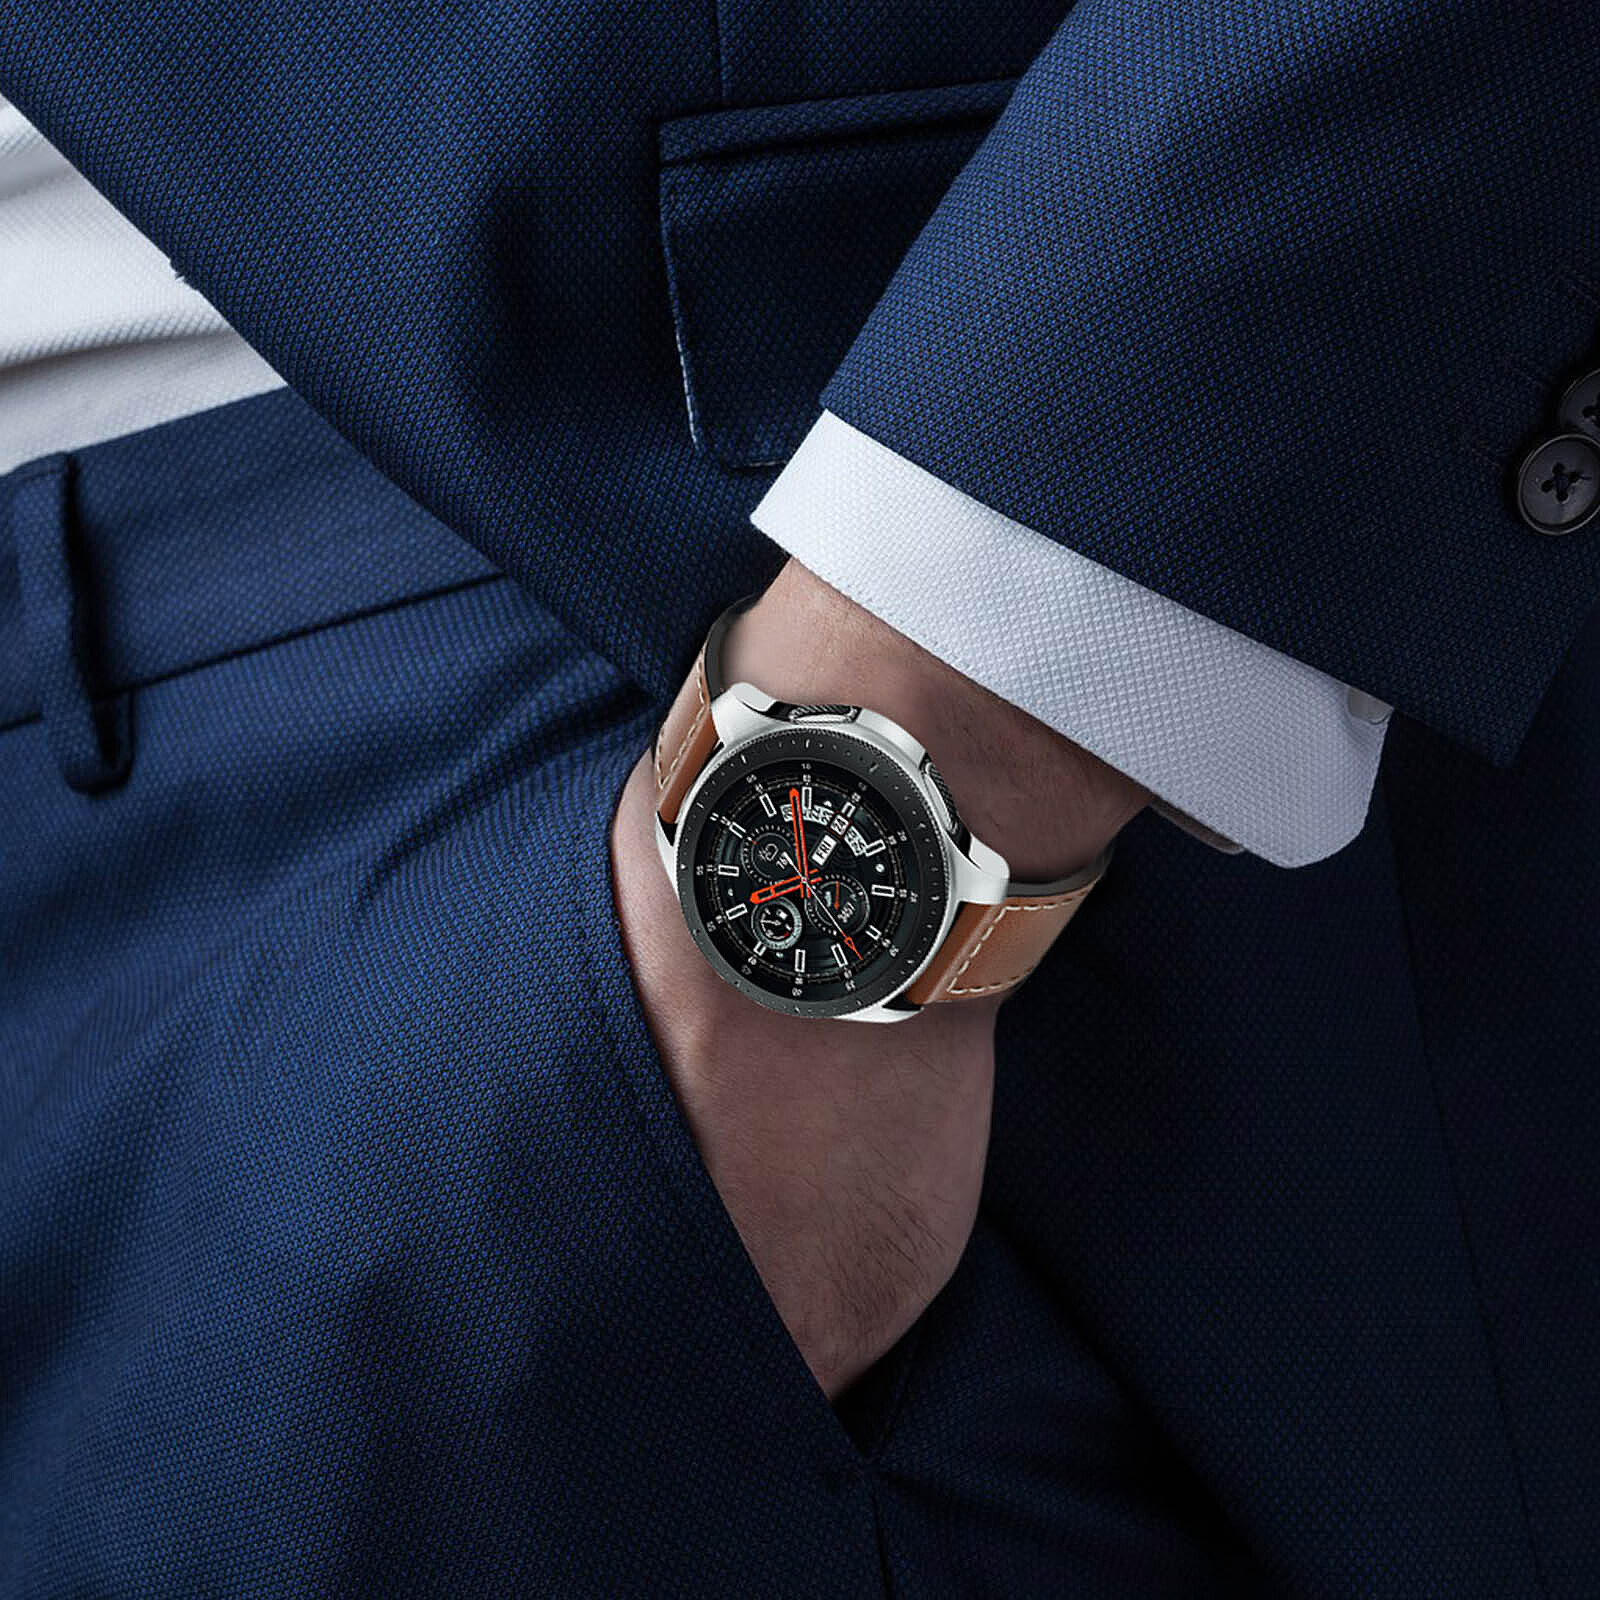 Avizar Bracelet Samsung Galaxy Watch 46 mm cuir véritable lisse